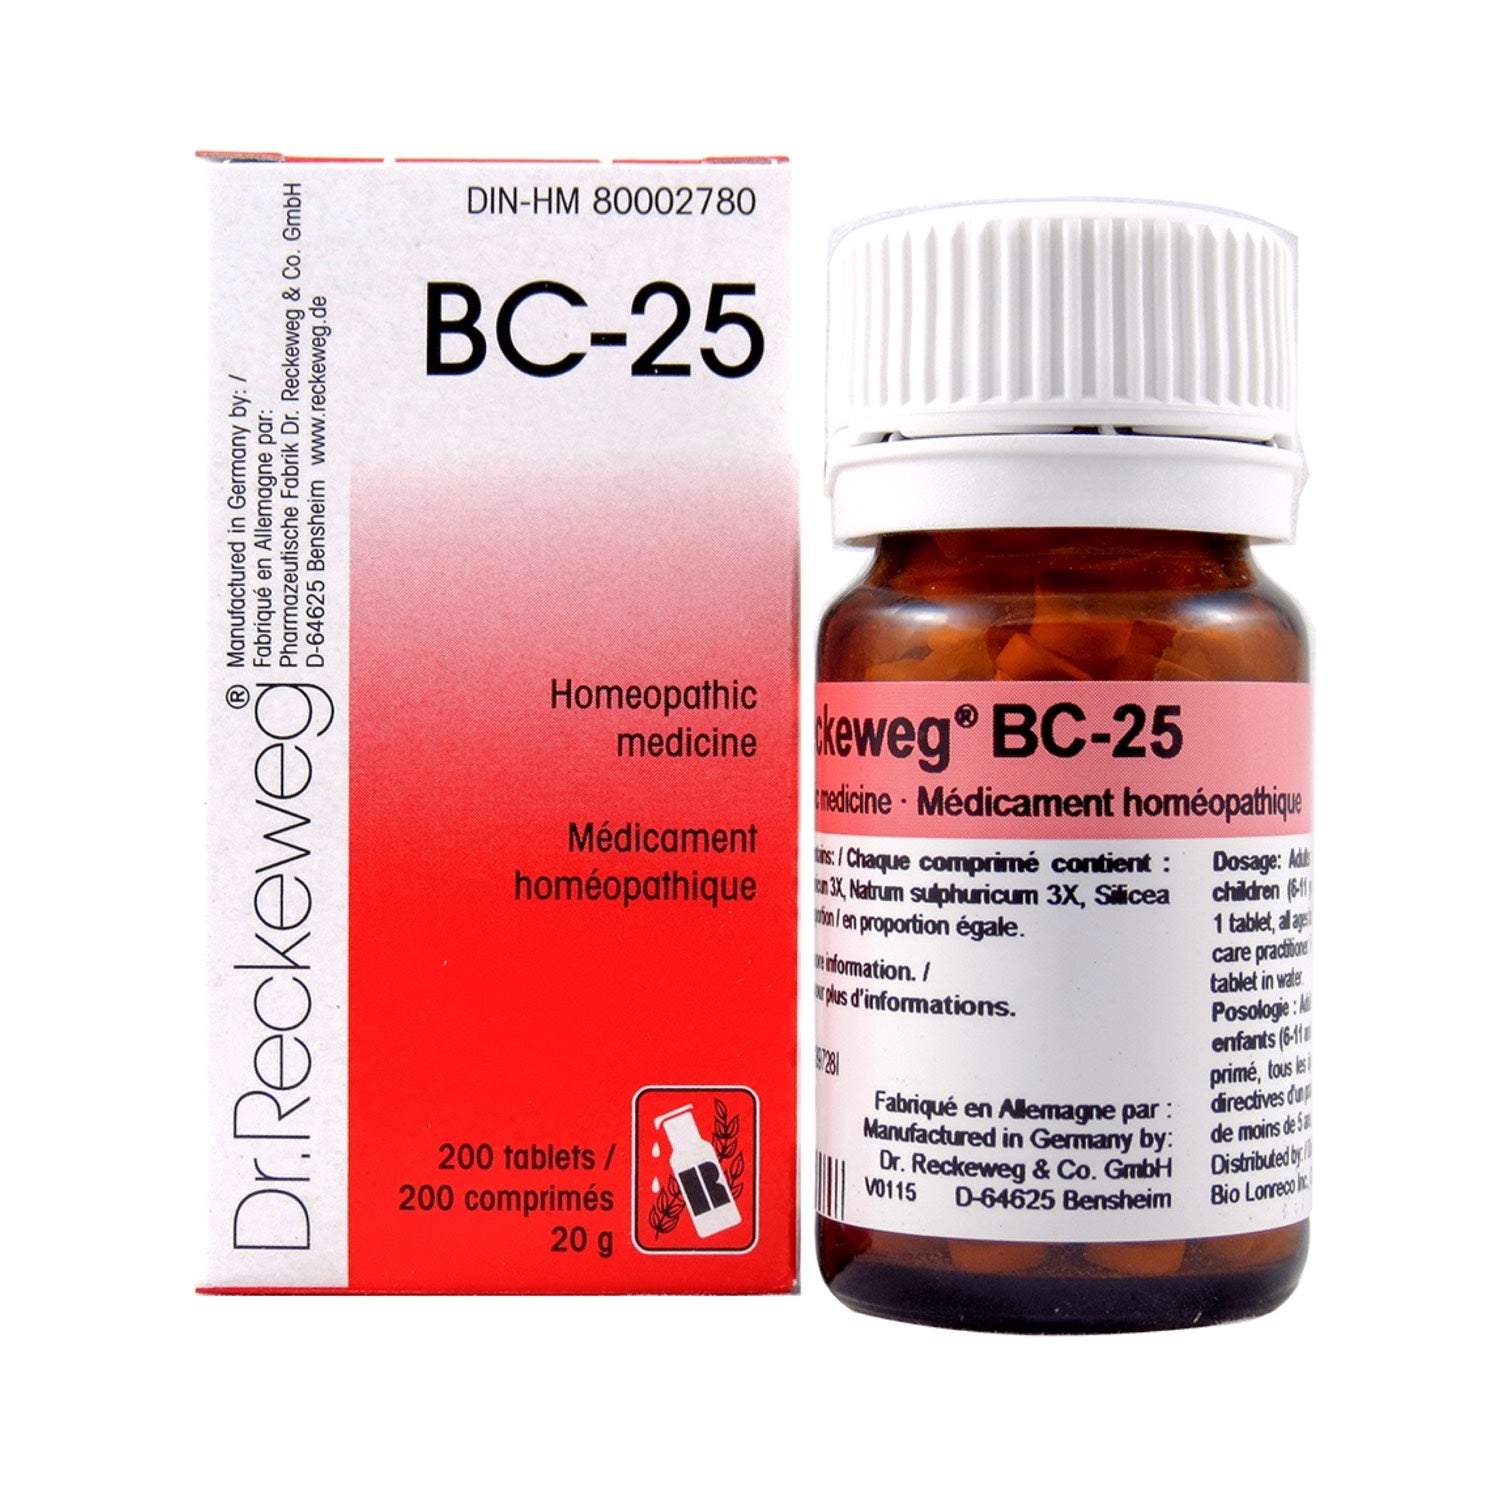 BC-25 Homeopathic medicine – Combination salt  200 tablets (20 g)